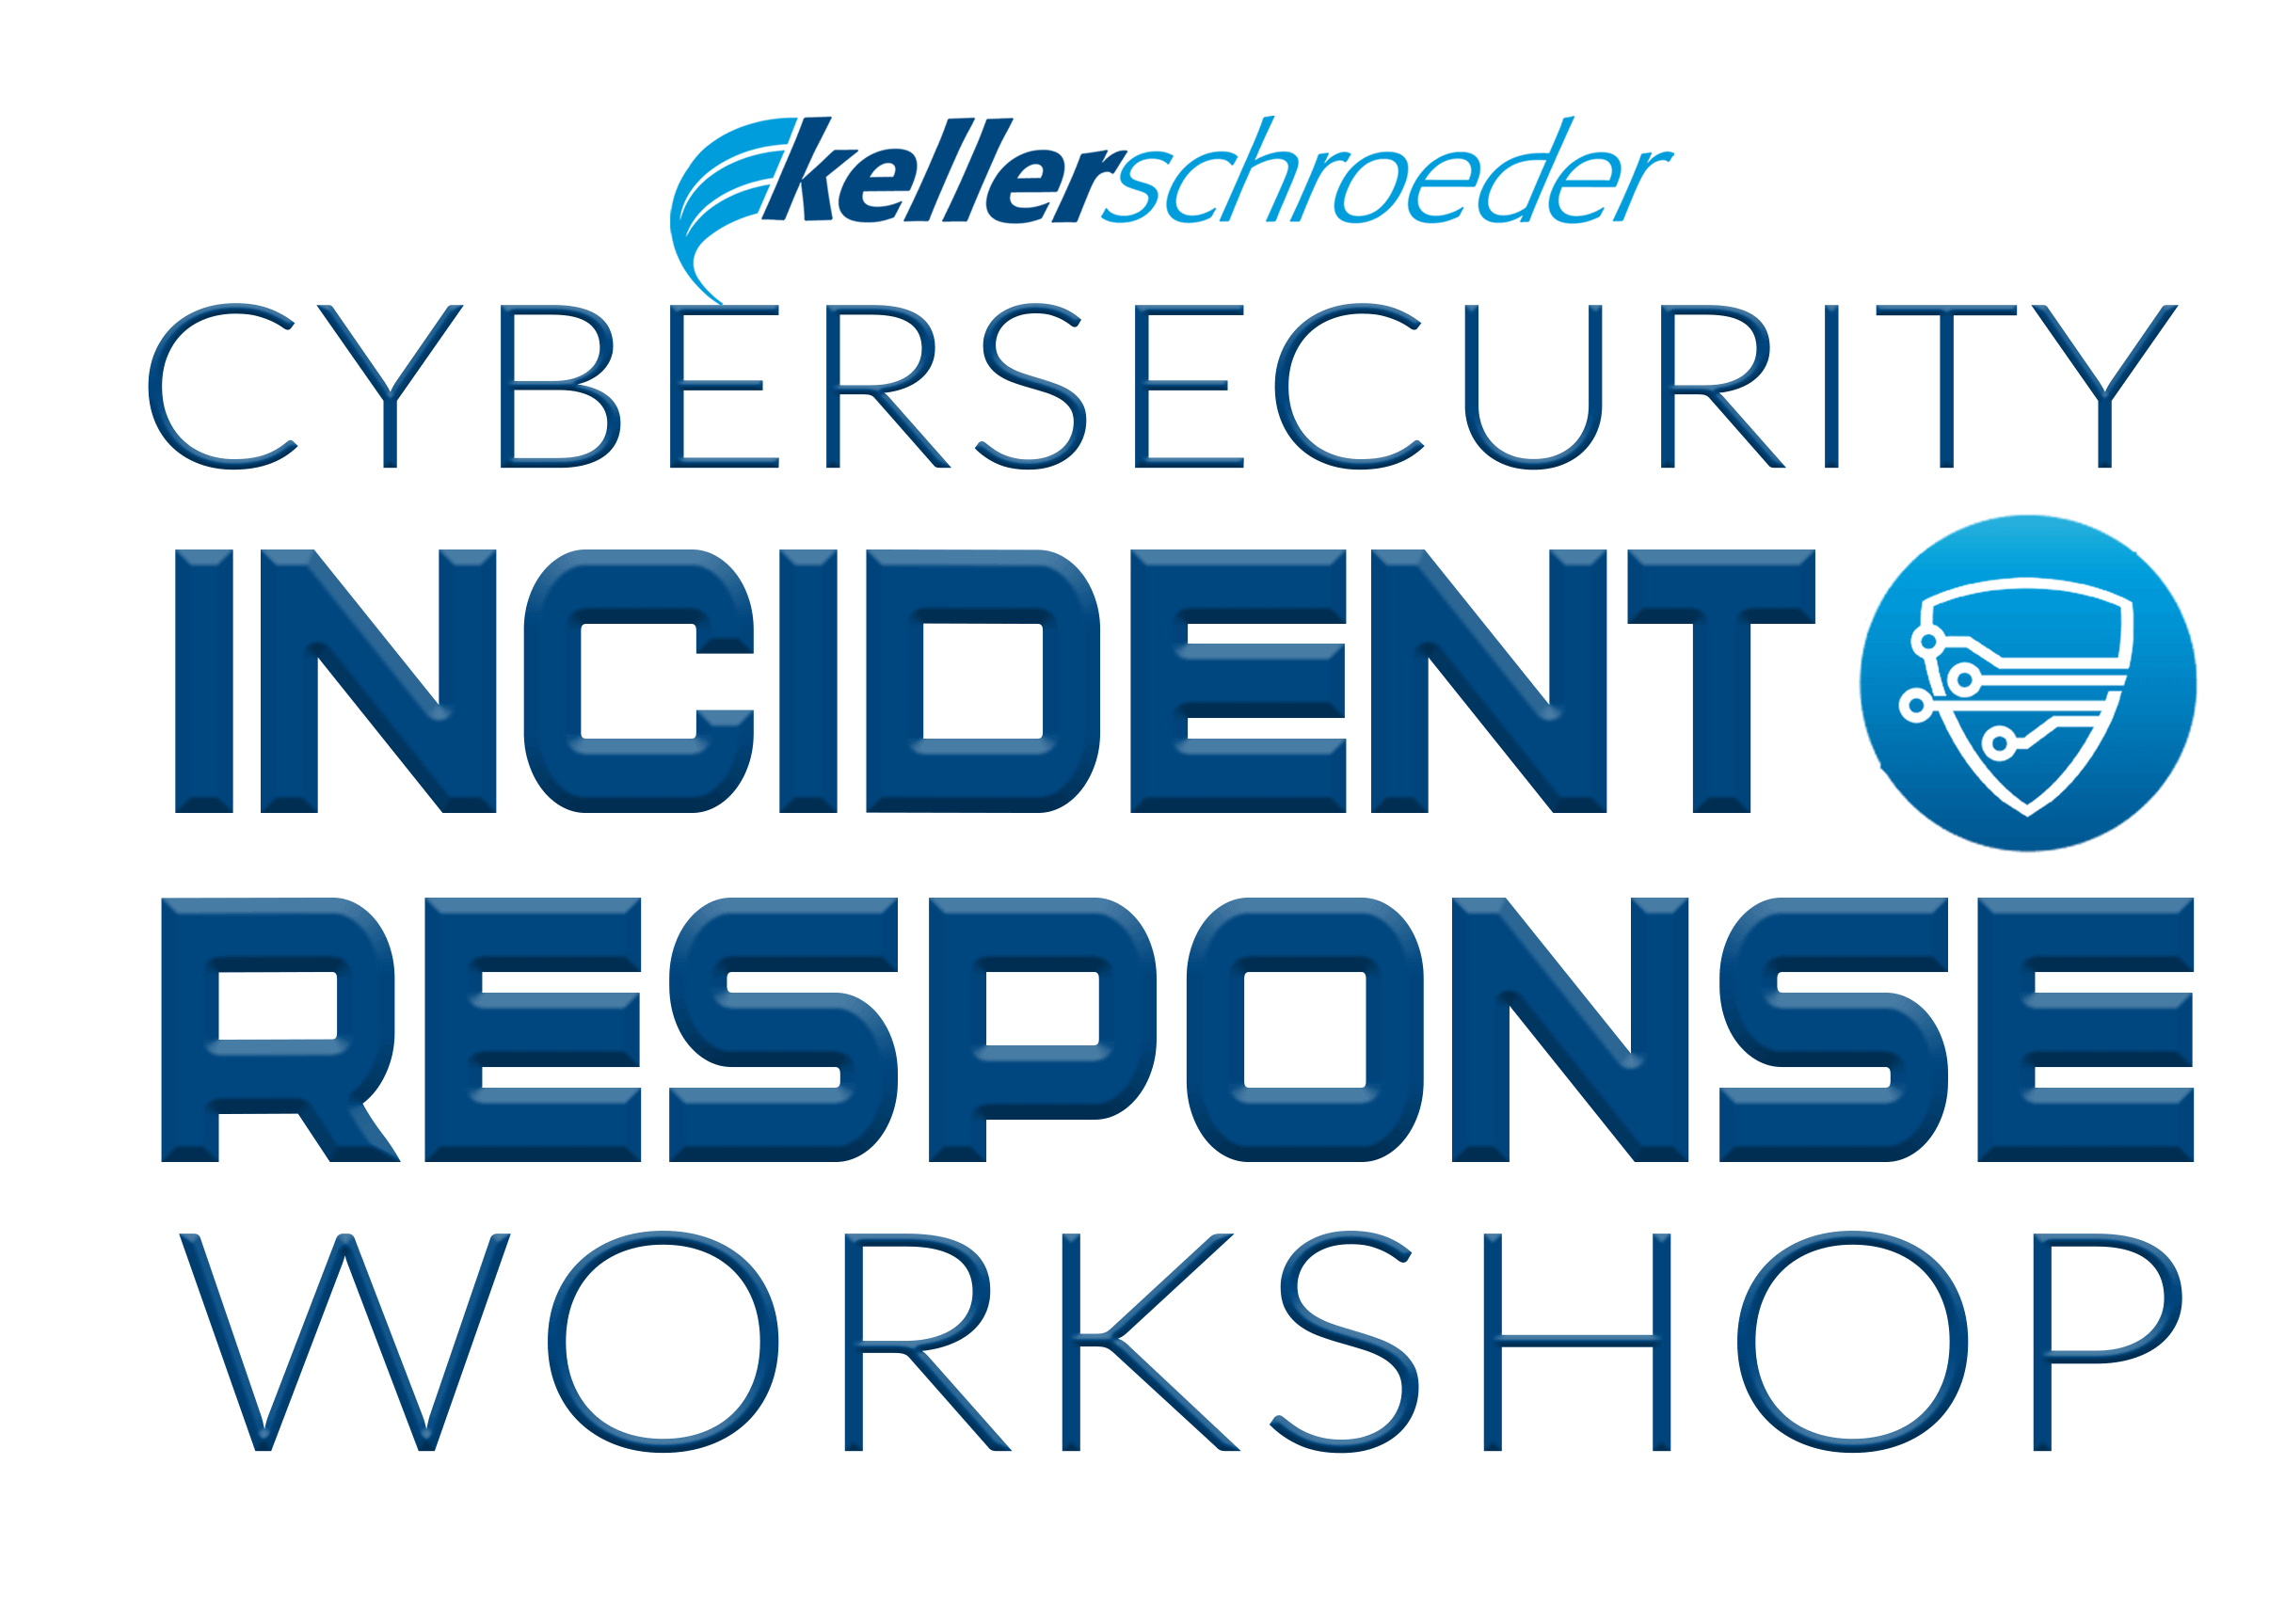 Security-Incident-Response-Workshop